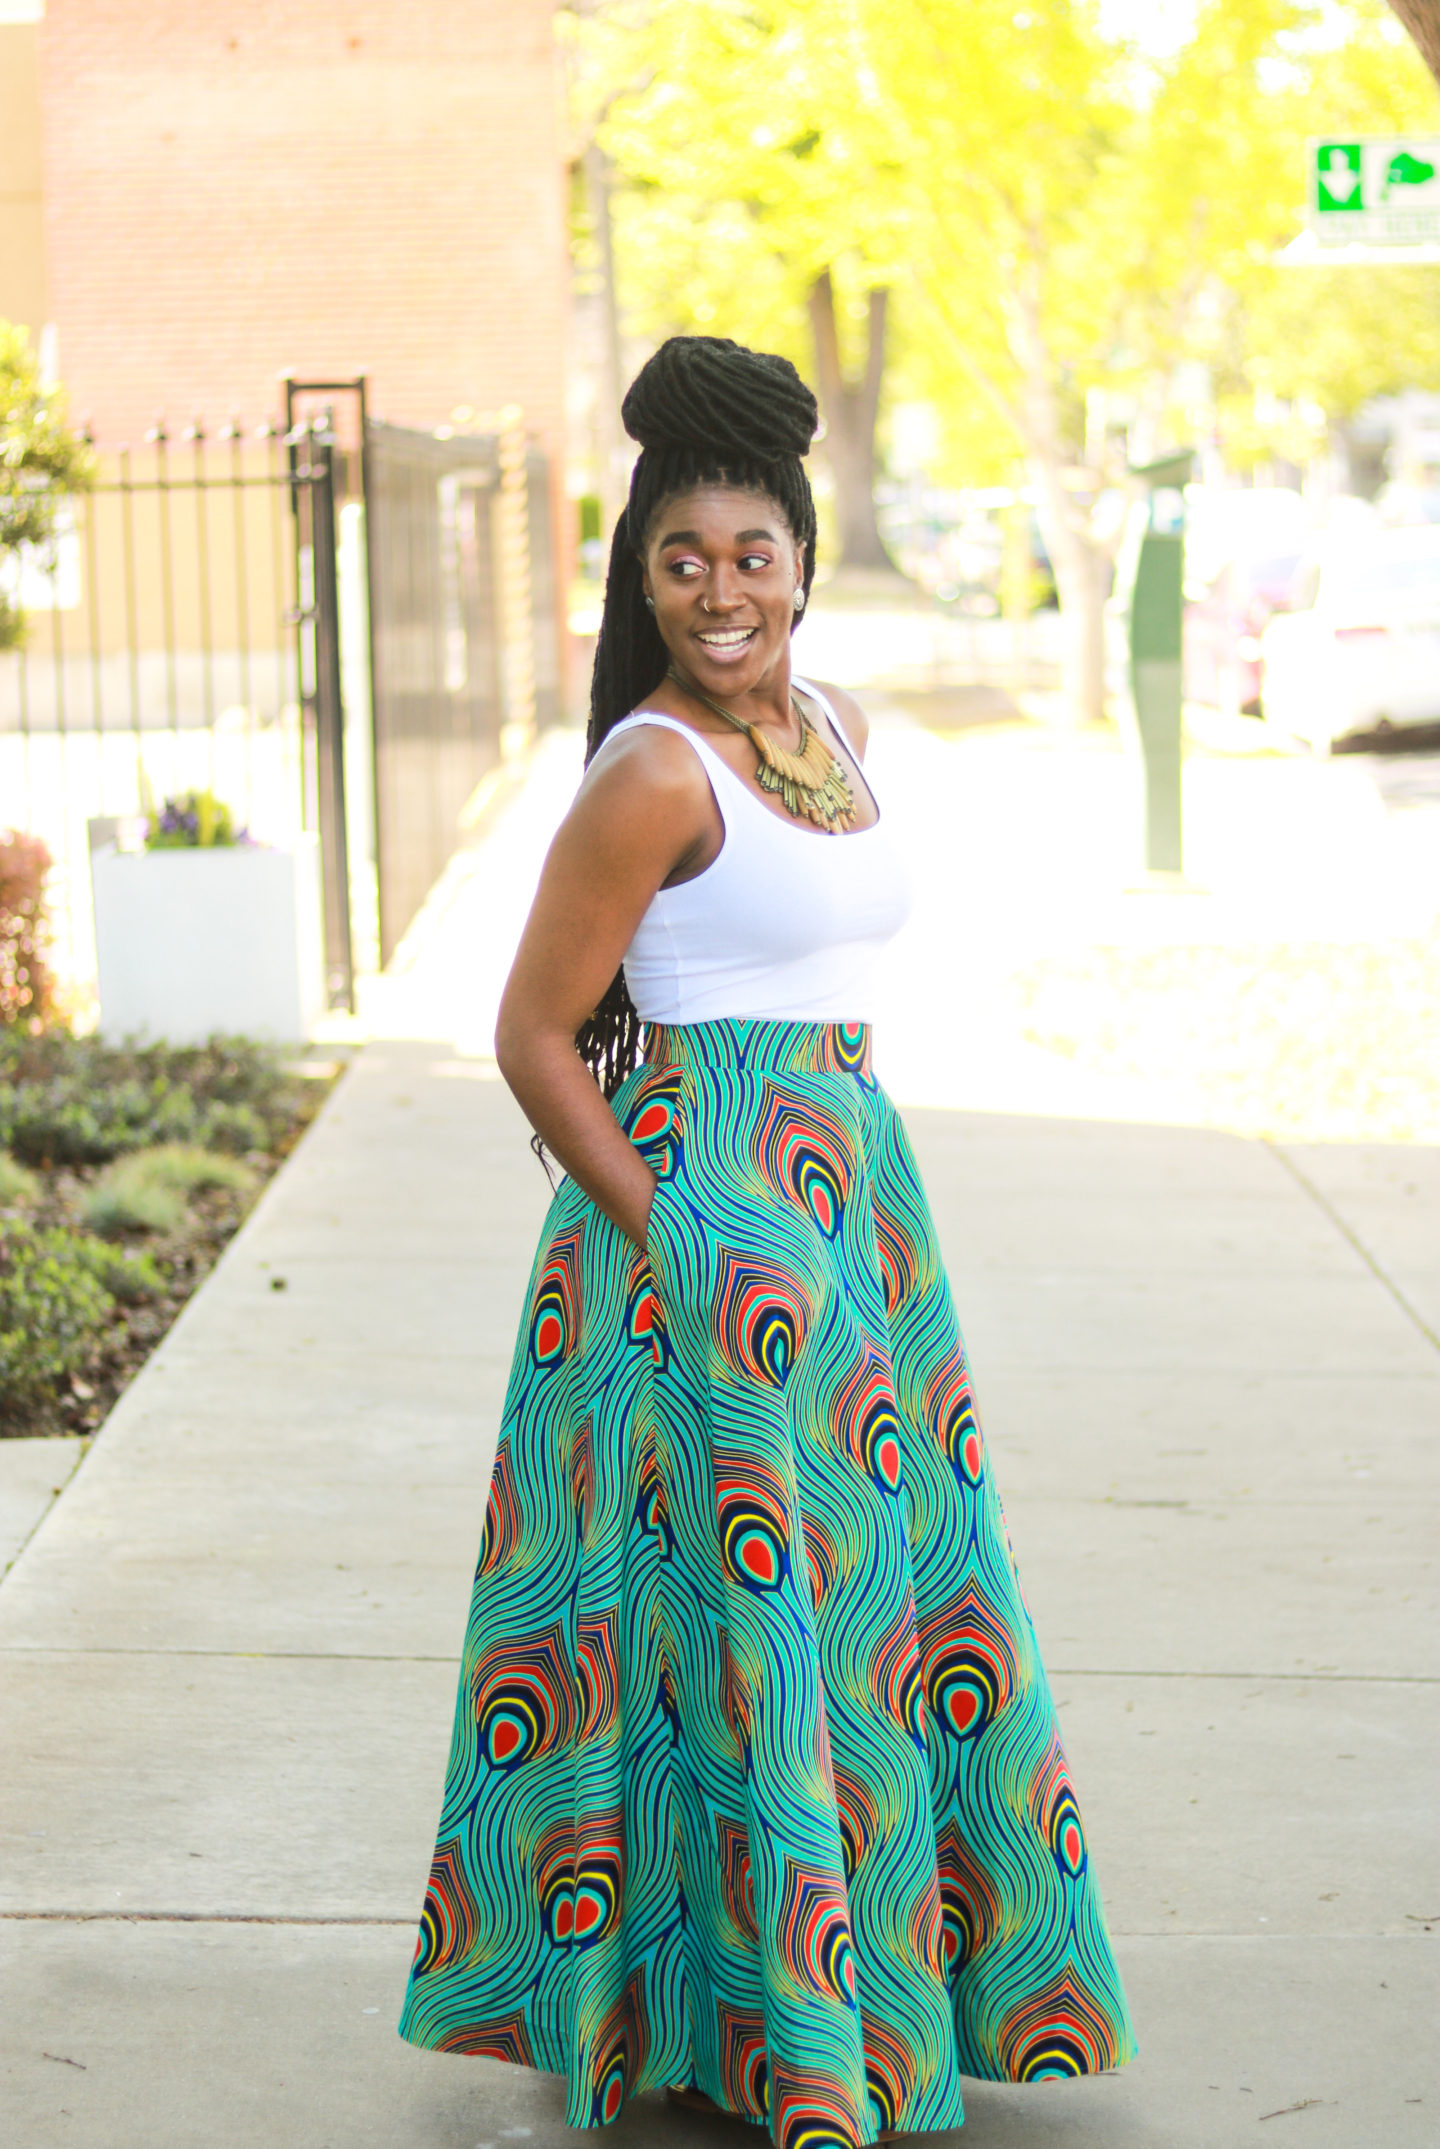 DIY Half Circle Skirt With Pockets Tutorial - Montoya Mayo